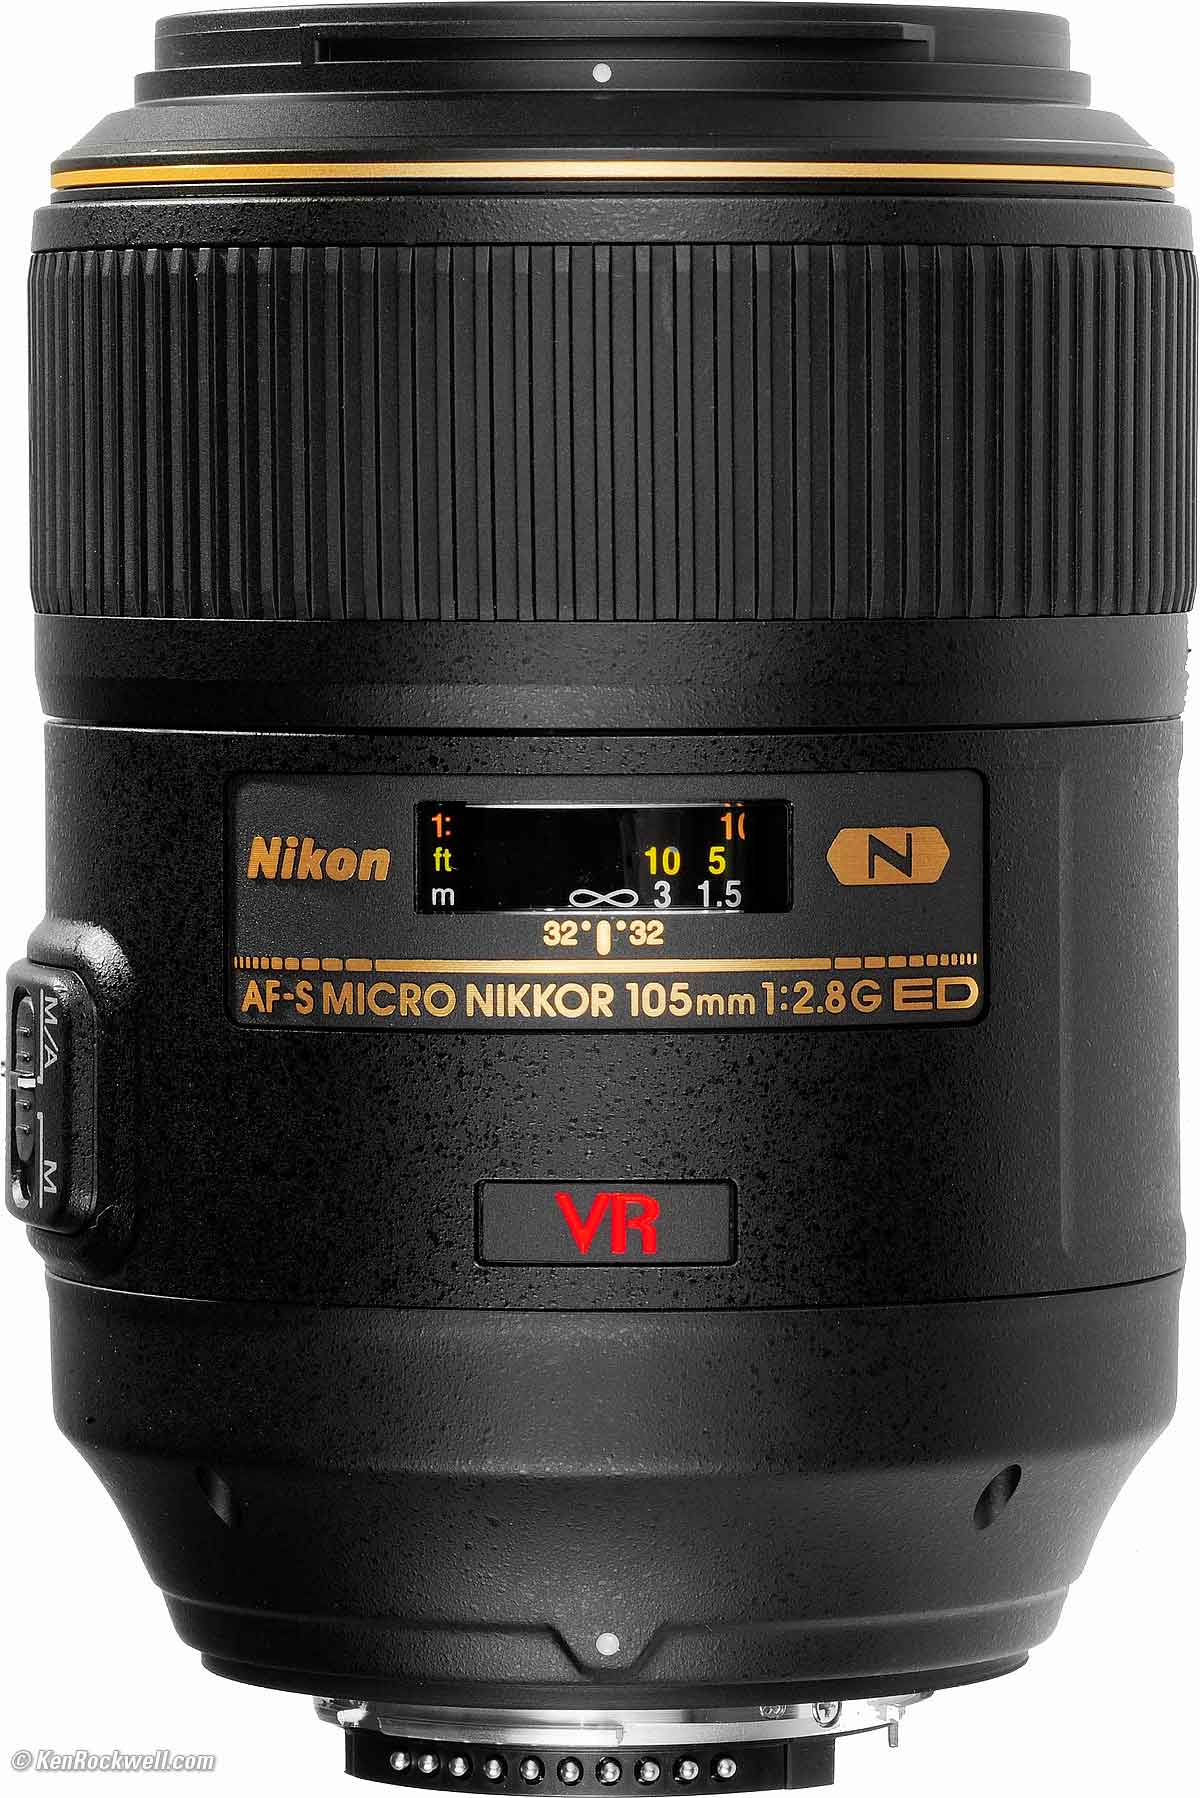 Nikon 105mm f/2.8 VR Review